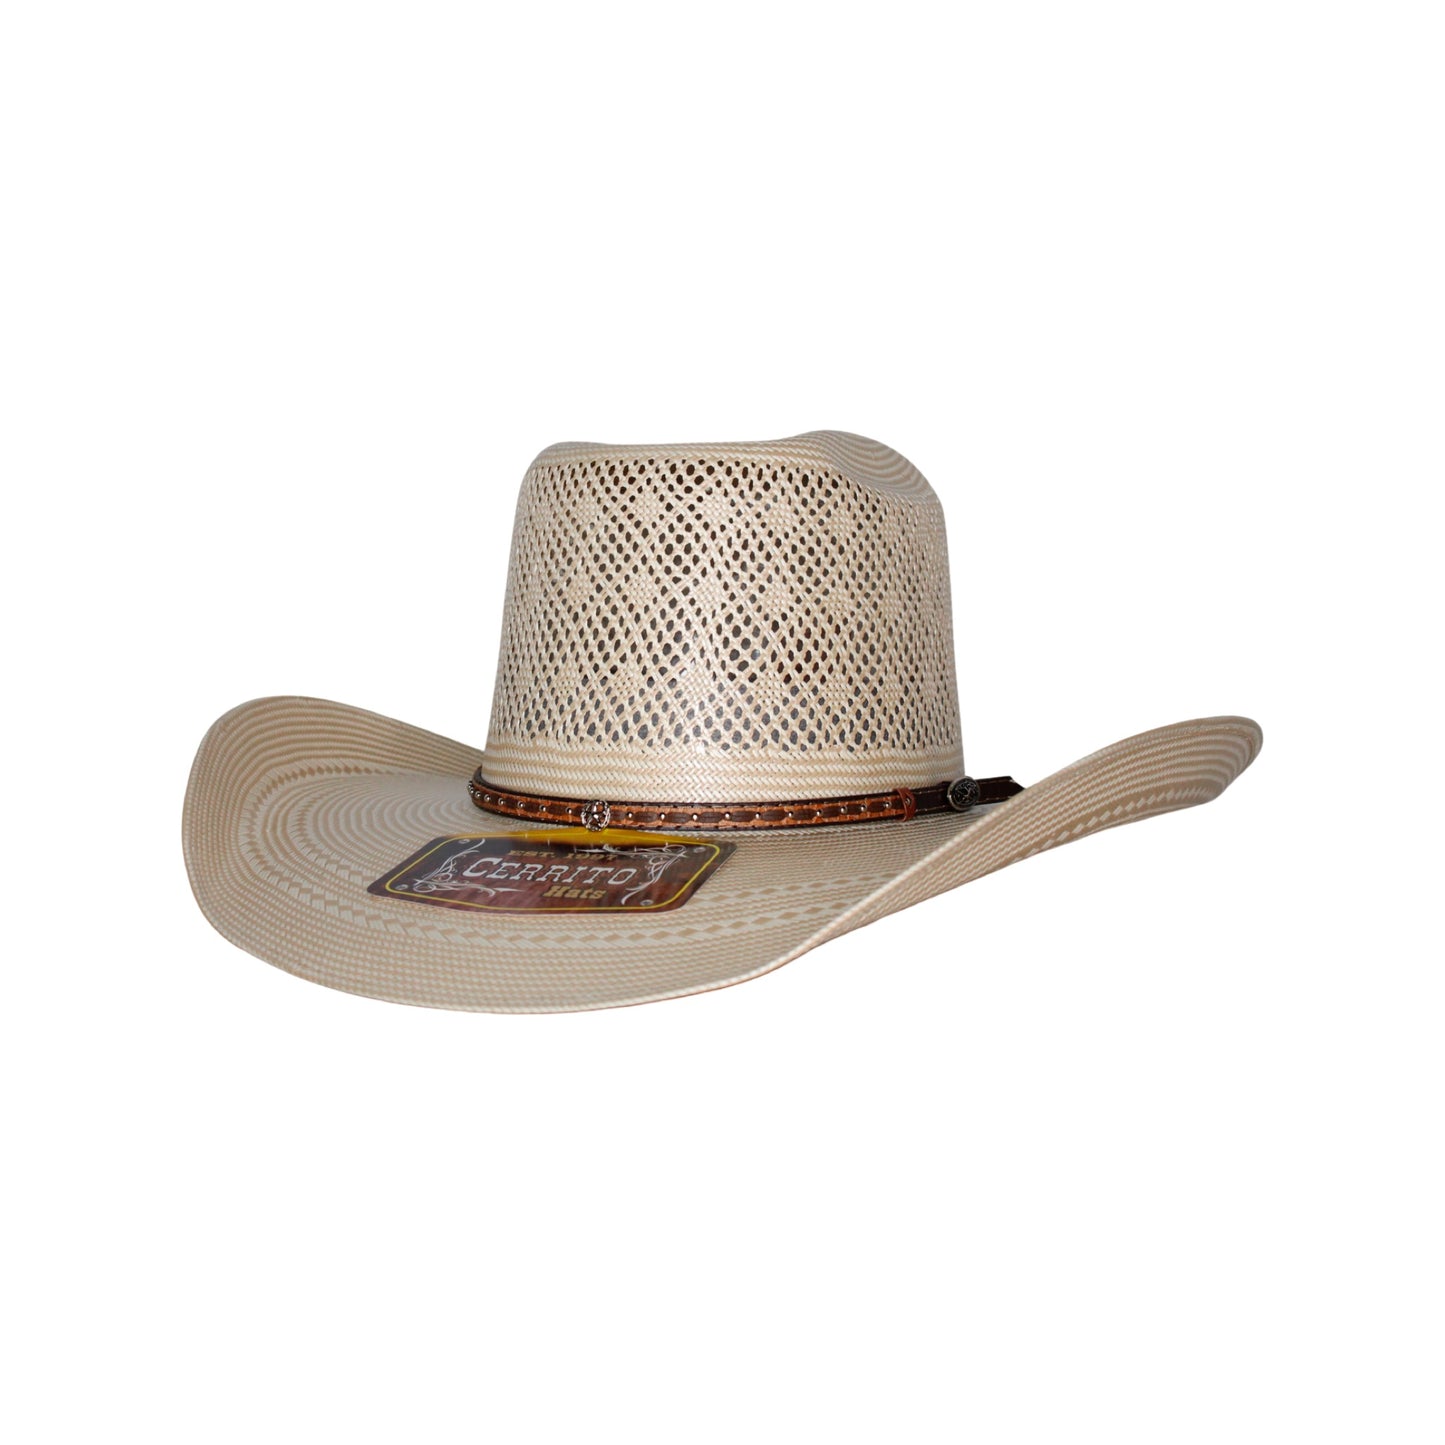 50x Cerrito "Bull" Straw Hat